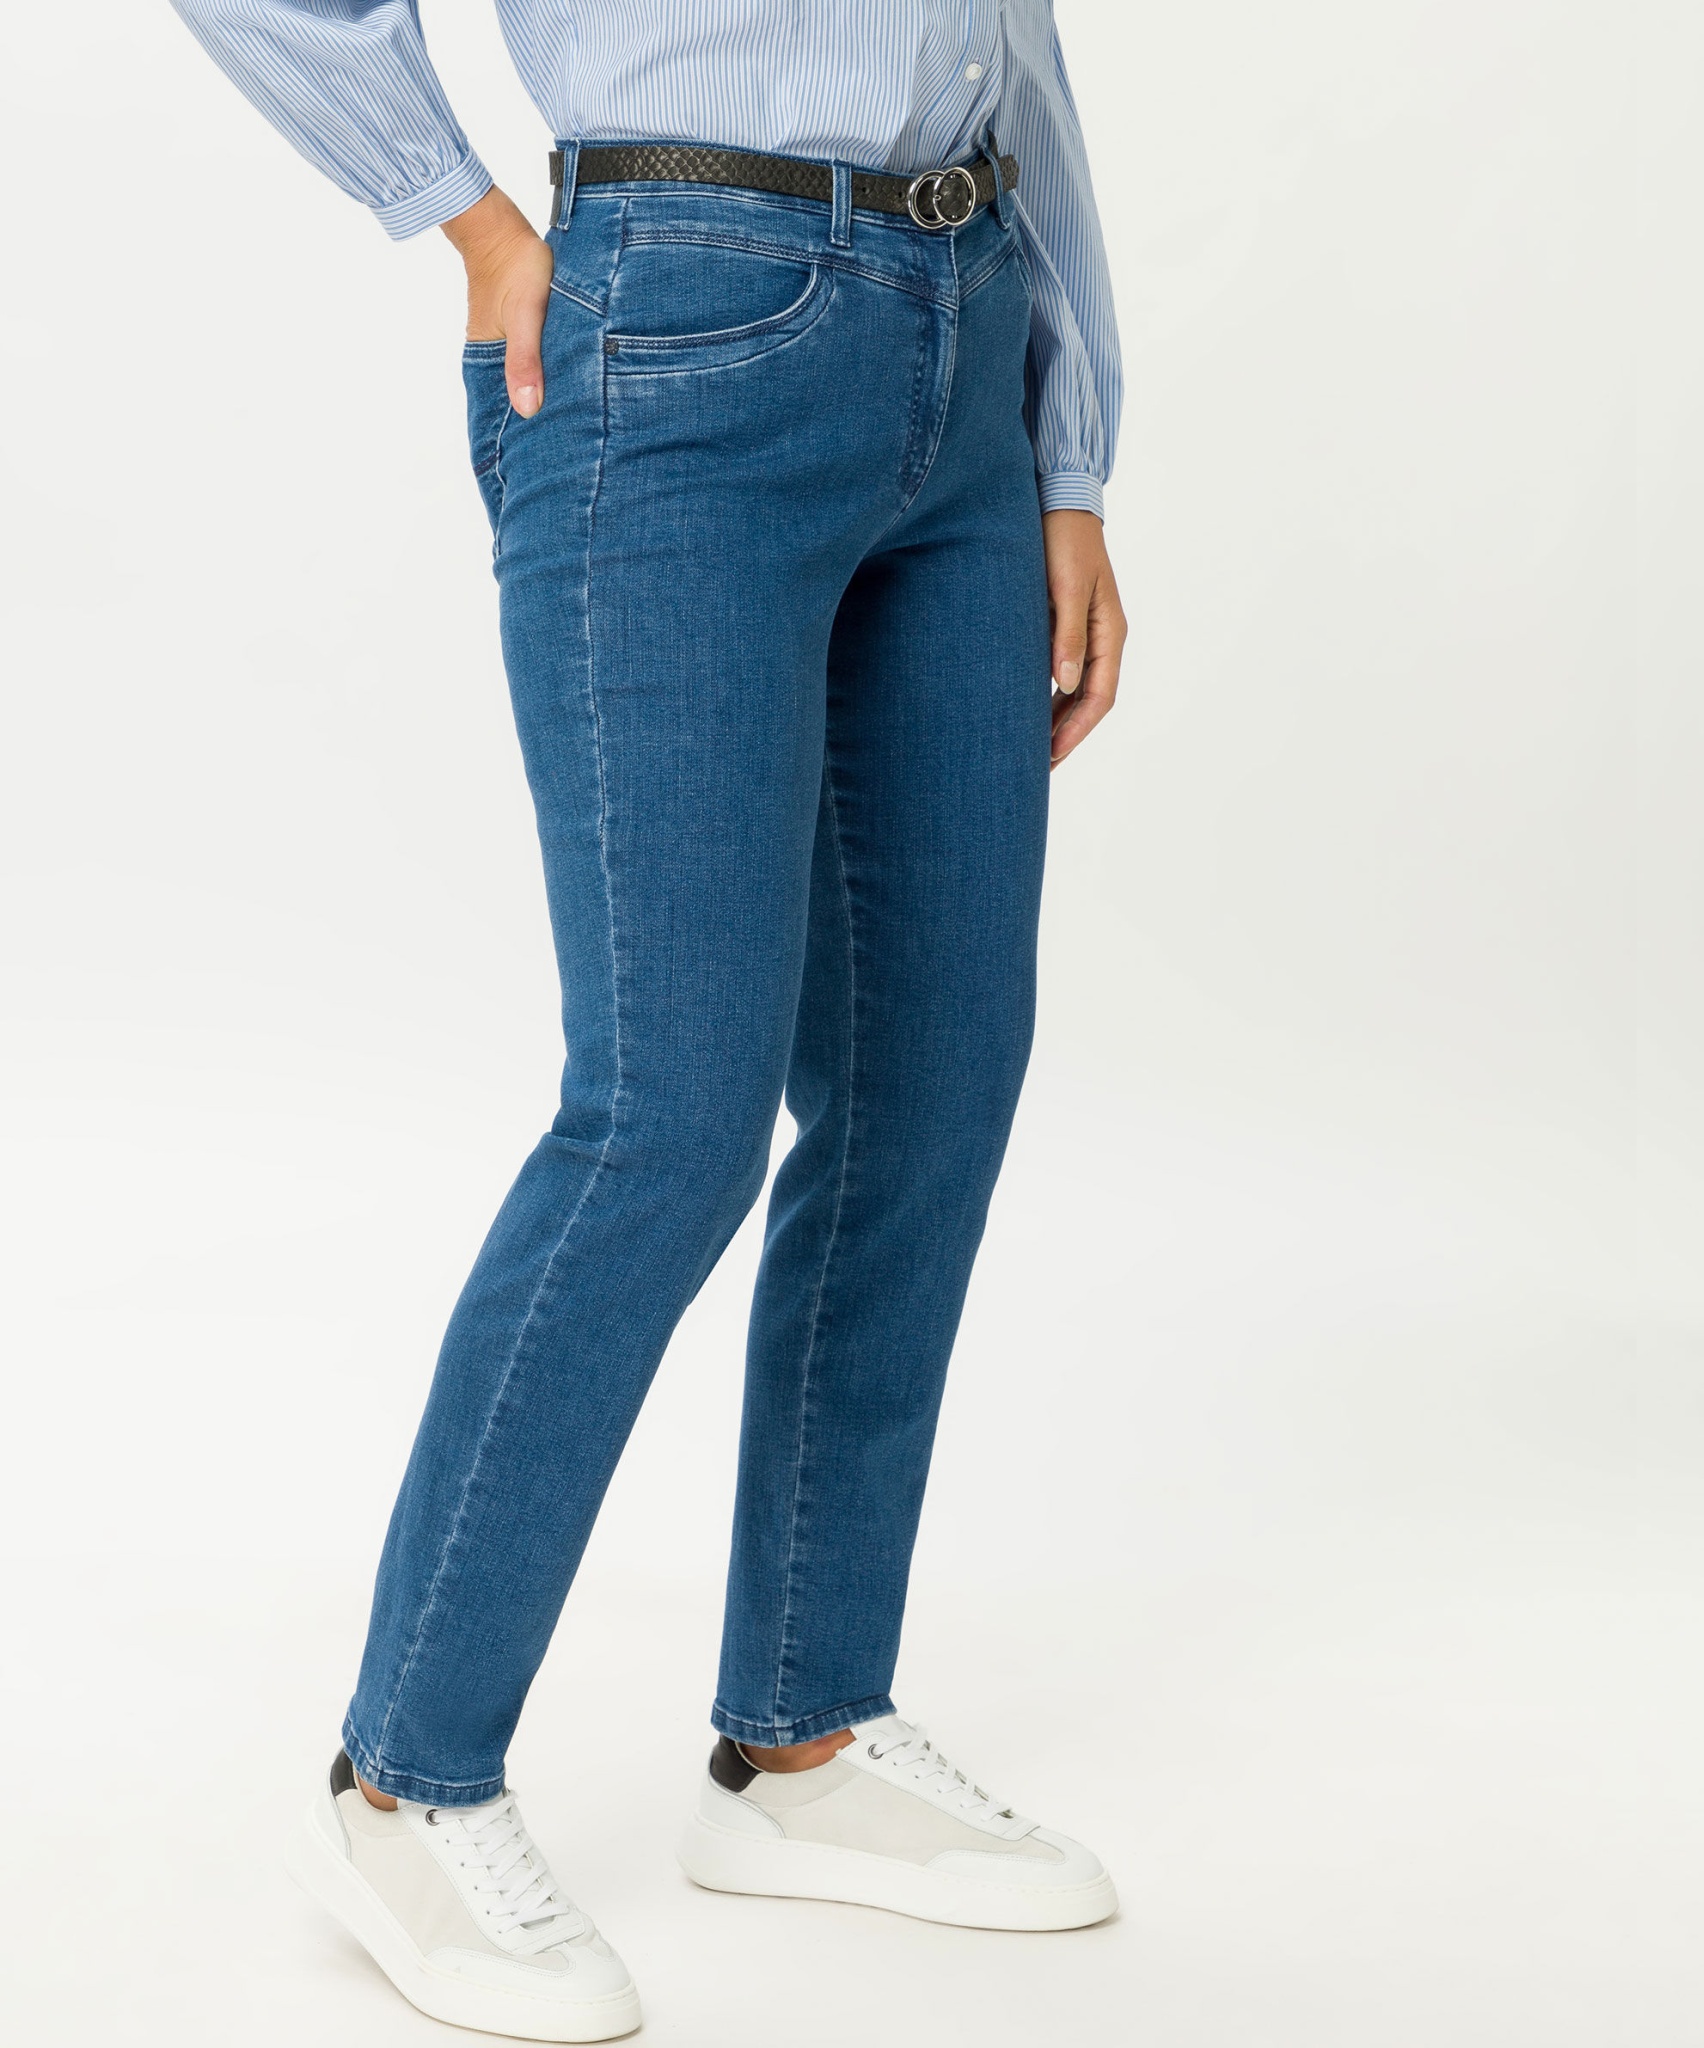 RAPHAELA BY BRAX Jeans Caren New 10715424 kaufen | WÖHRL